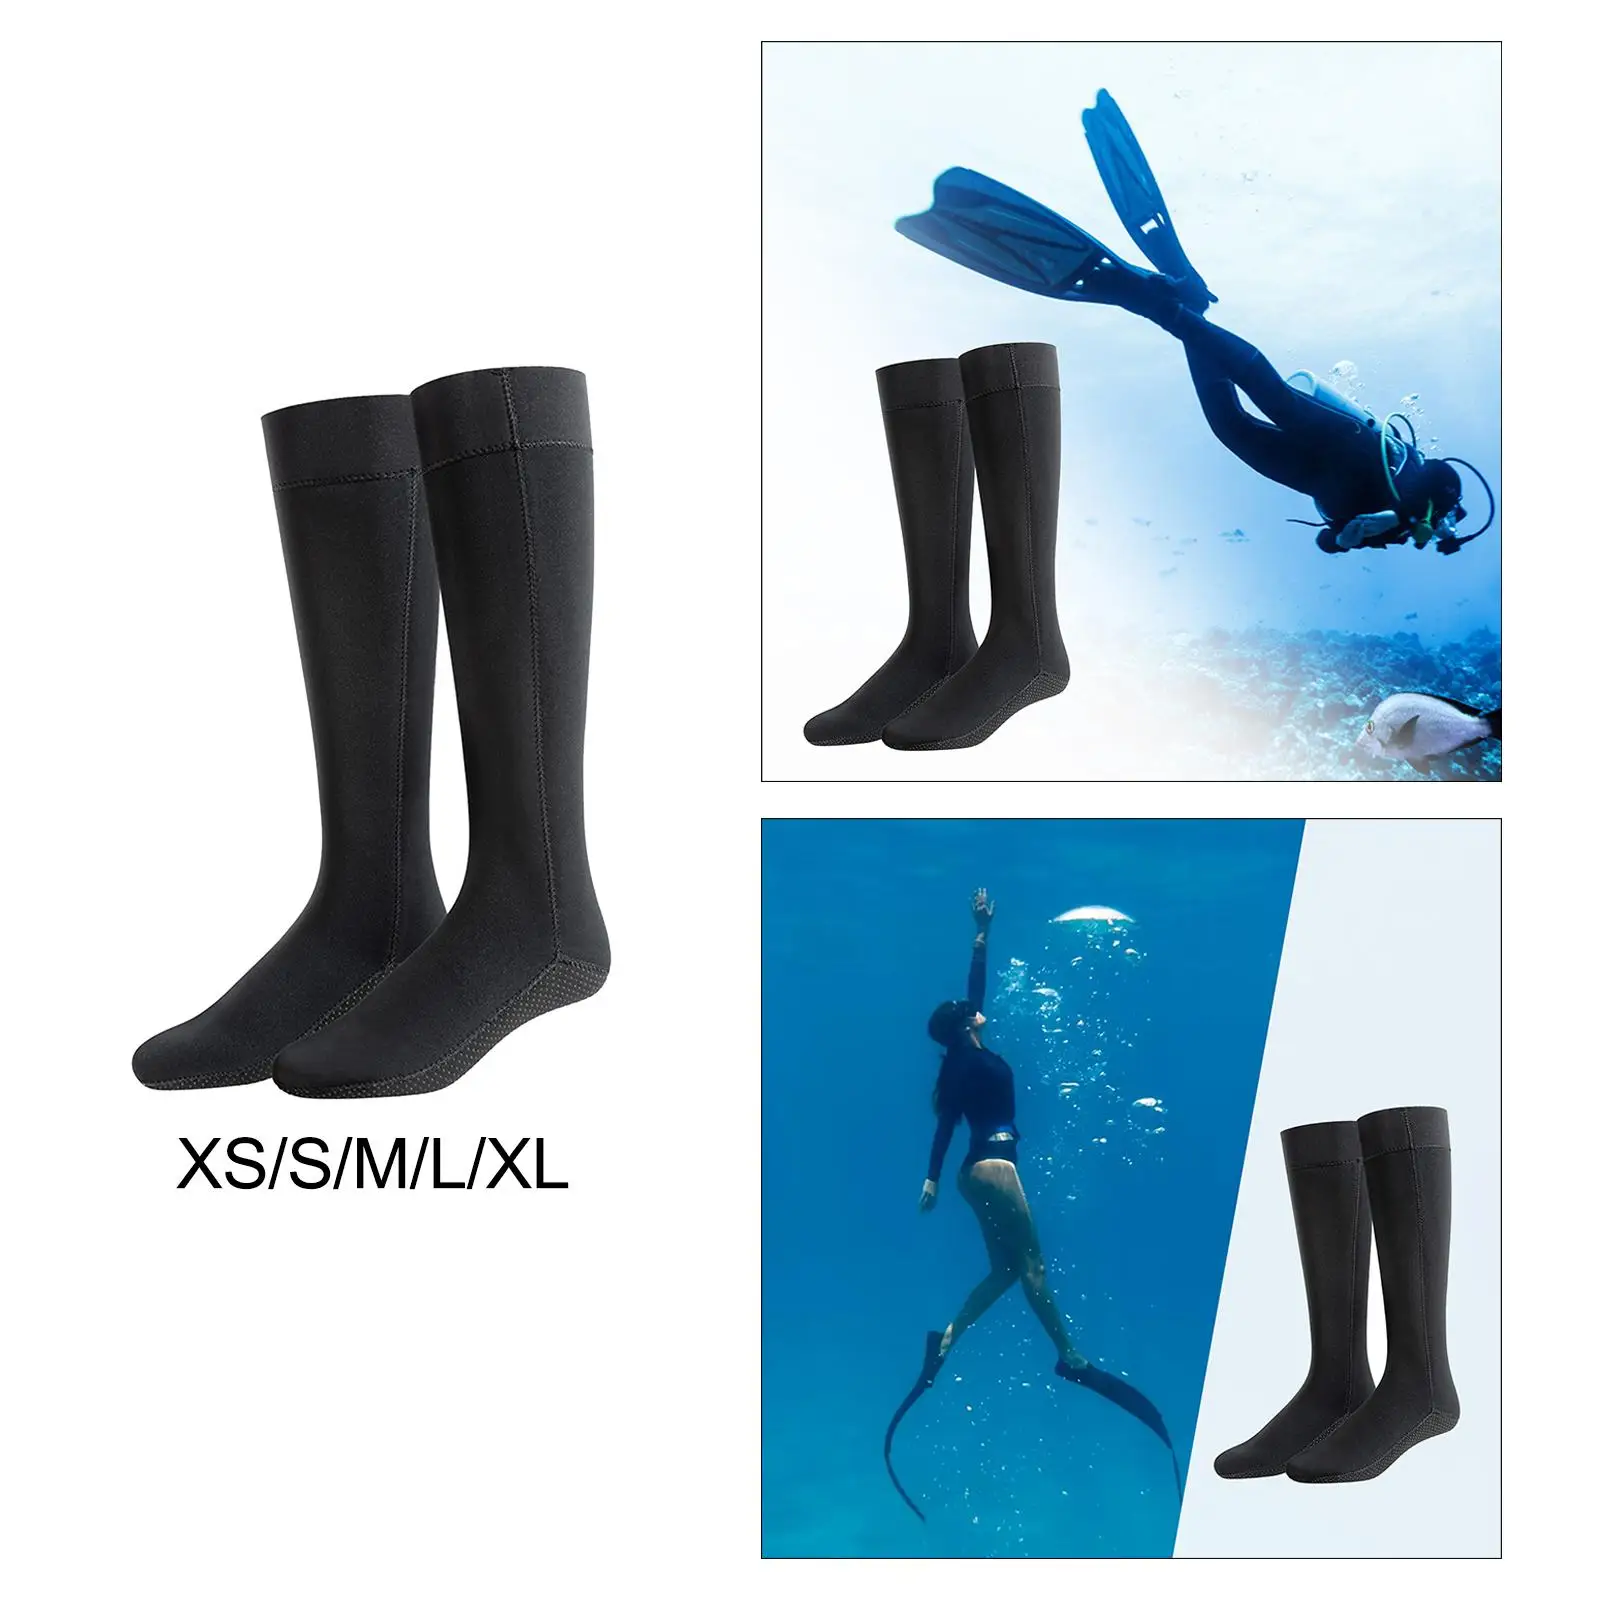 Diving Socks Thermal Flexible Anti Slip Neoprene Socks Water Socks for Surfing Beach Sailing Outdoor Activities Swim